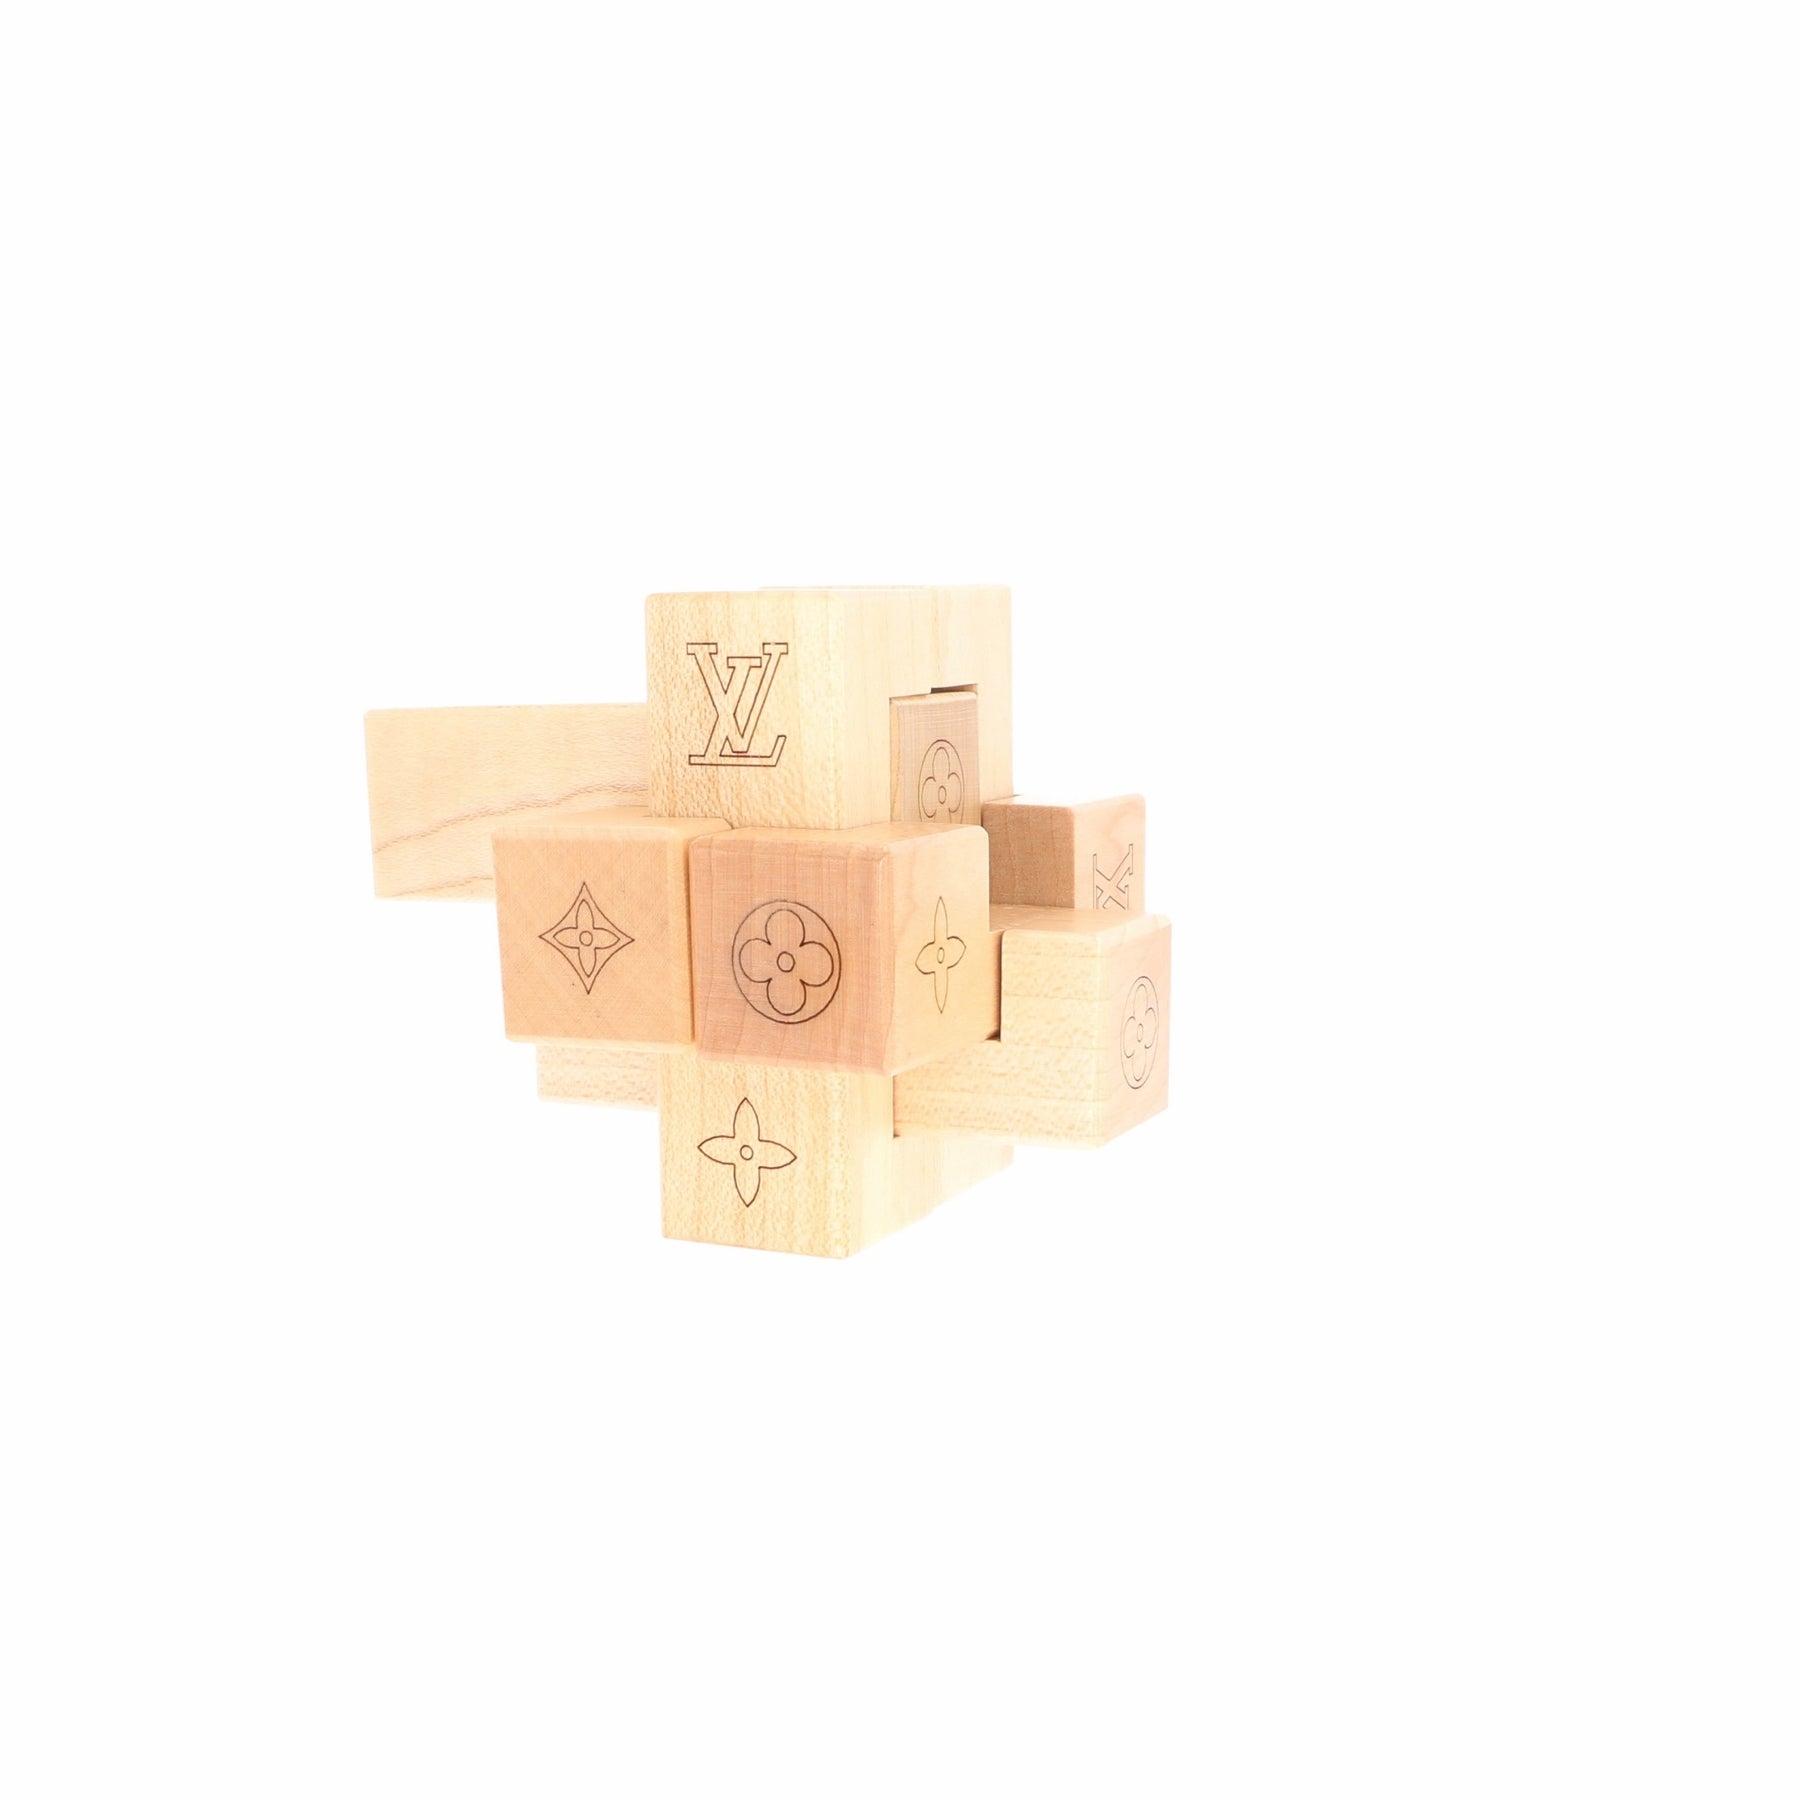 Le Pateki Wooden Puzzle Game from Louis Vuitton, 2006